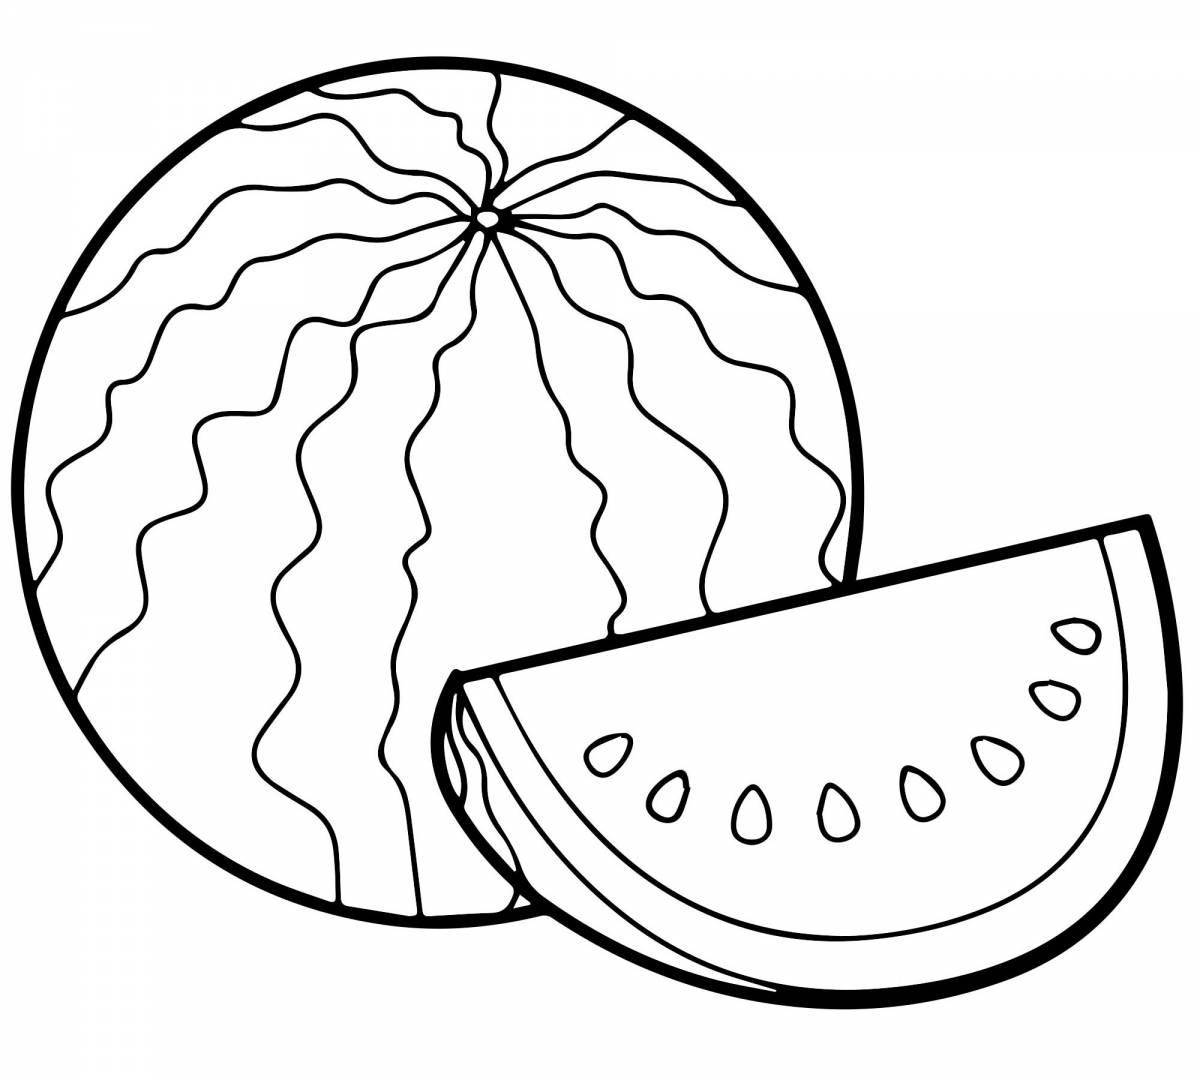 Веселый рисунок арбуза